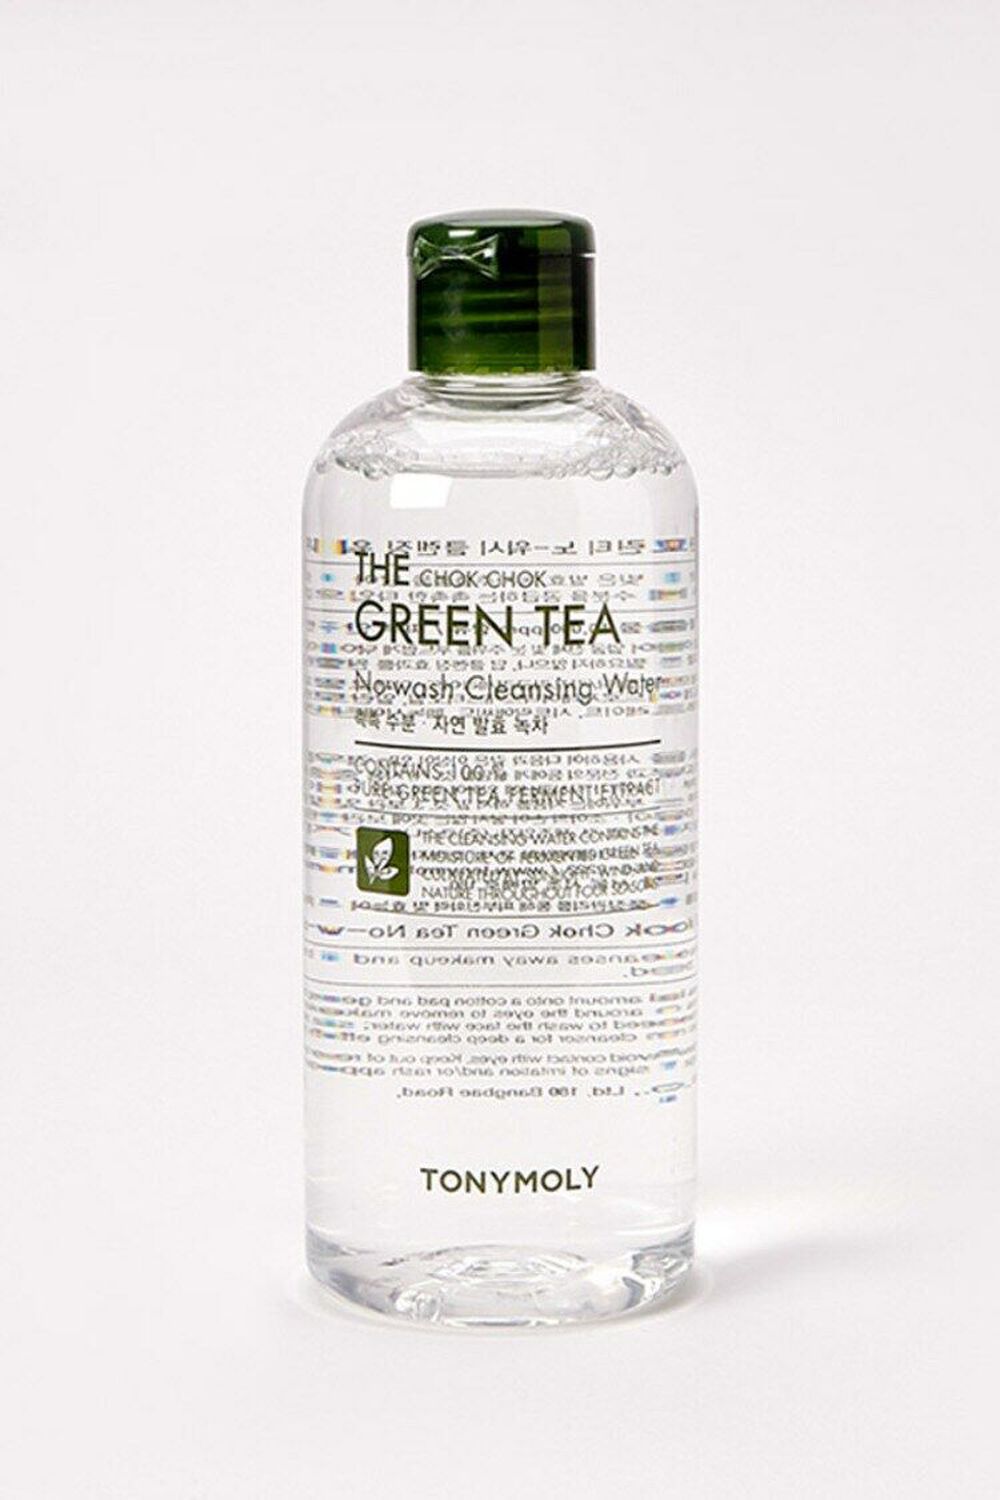 TONYMOLY The Chok Chok Green Tea Cleansing Water, image 1